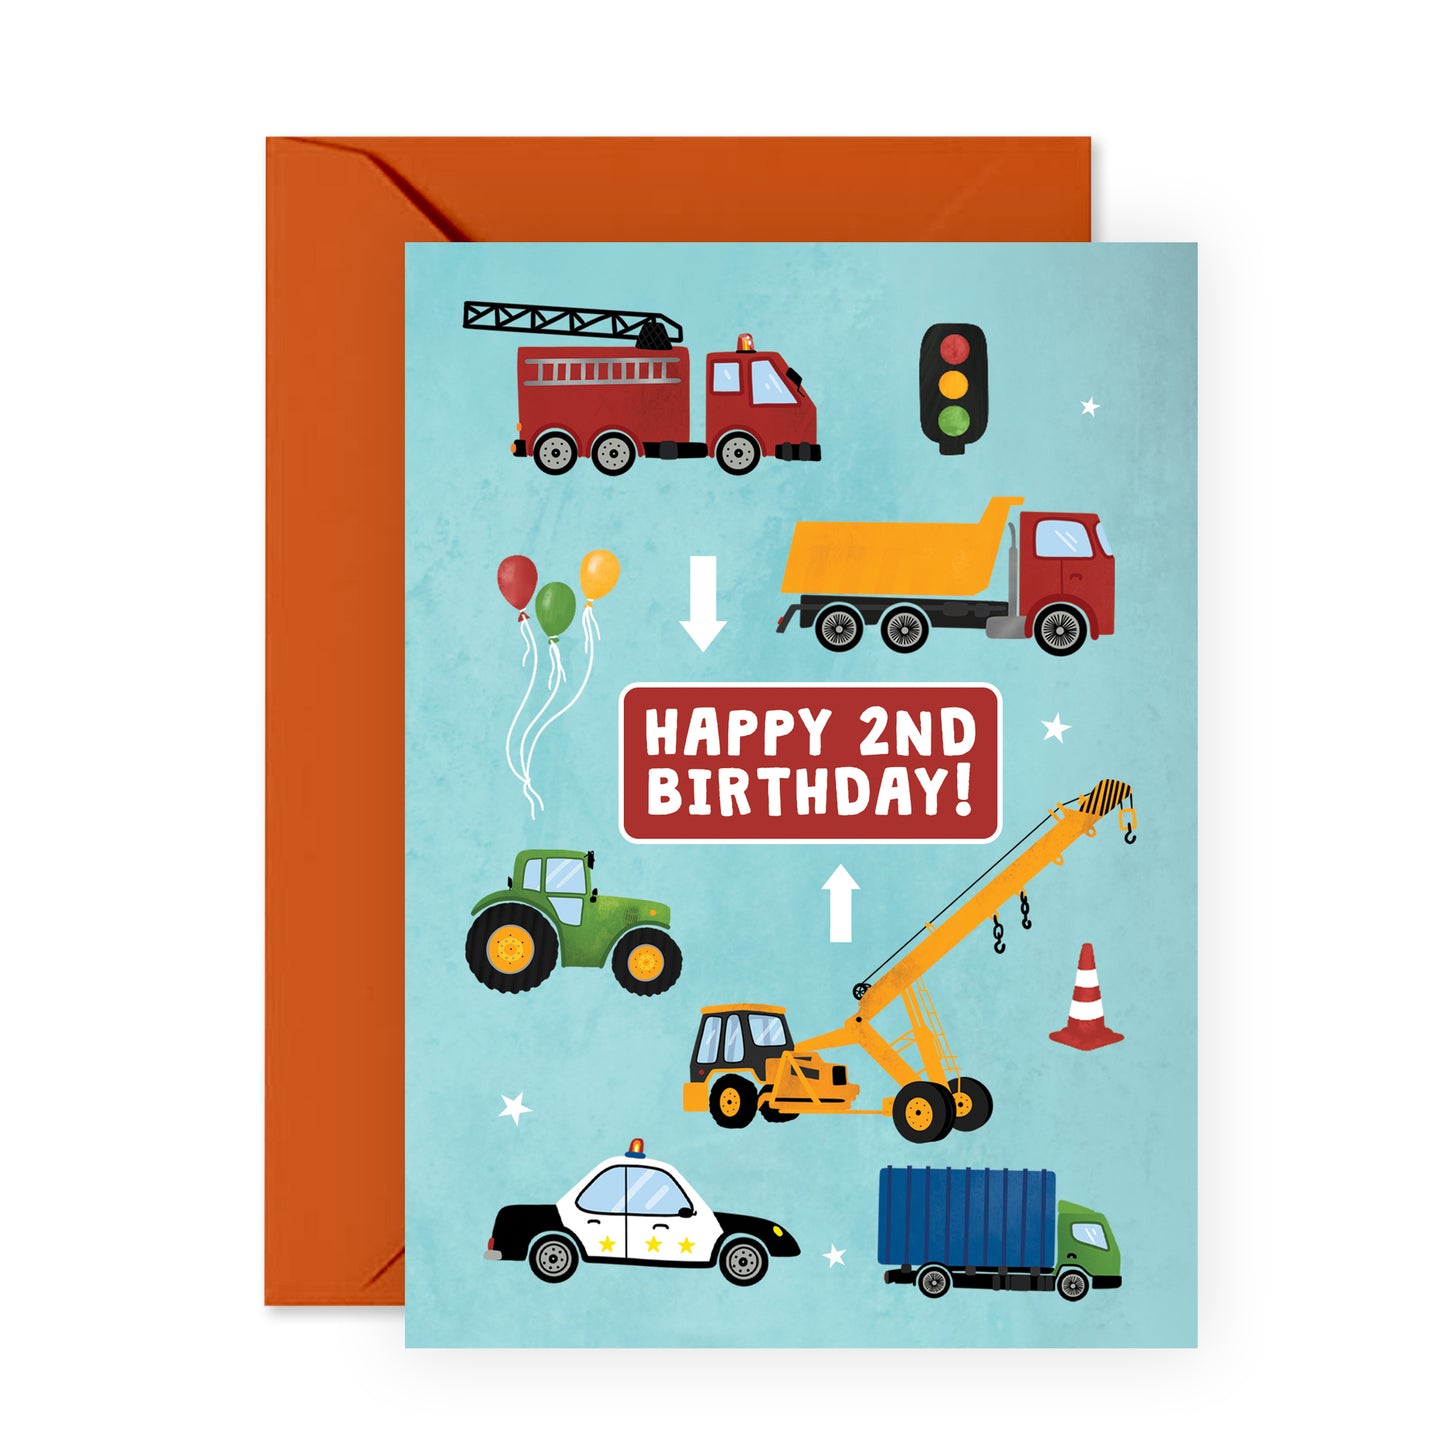 Second Birthday Card - Happy 2nd Birthday - For Kids Boys Girls